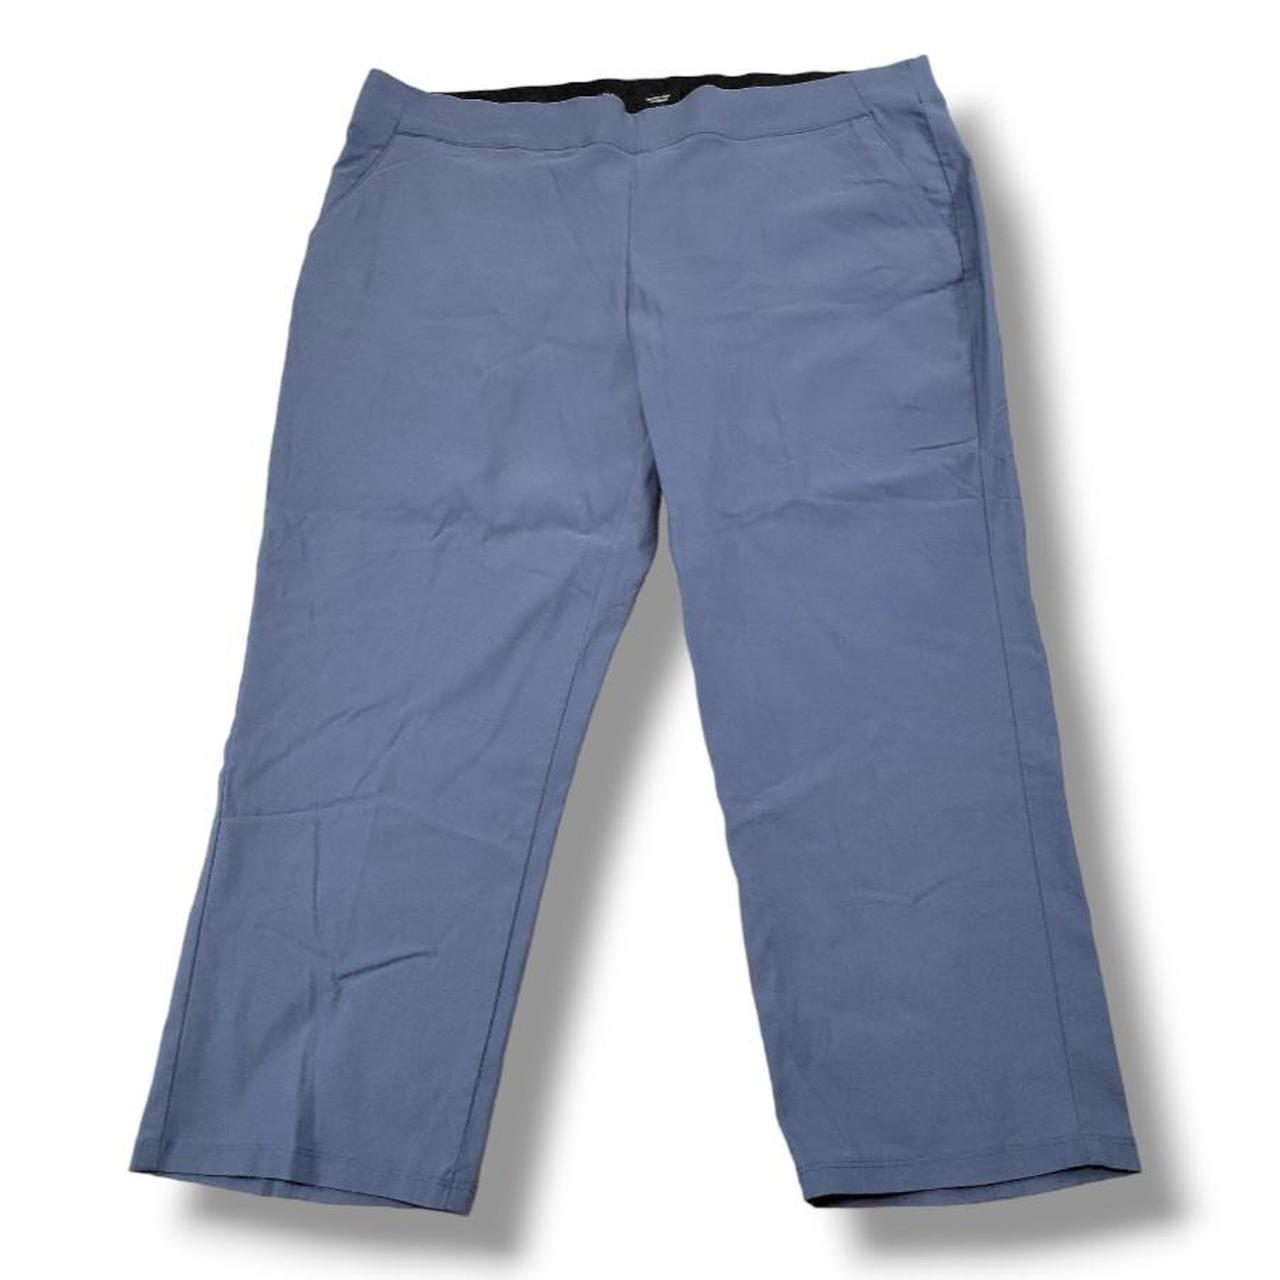 Simply Vera Wang Womens Jegging Pants Medium Blue Pull On Polyester Navy